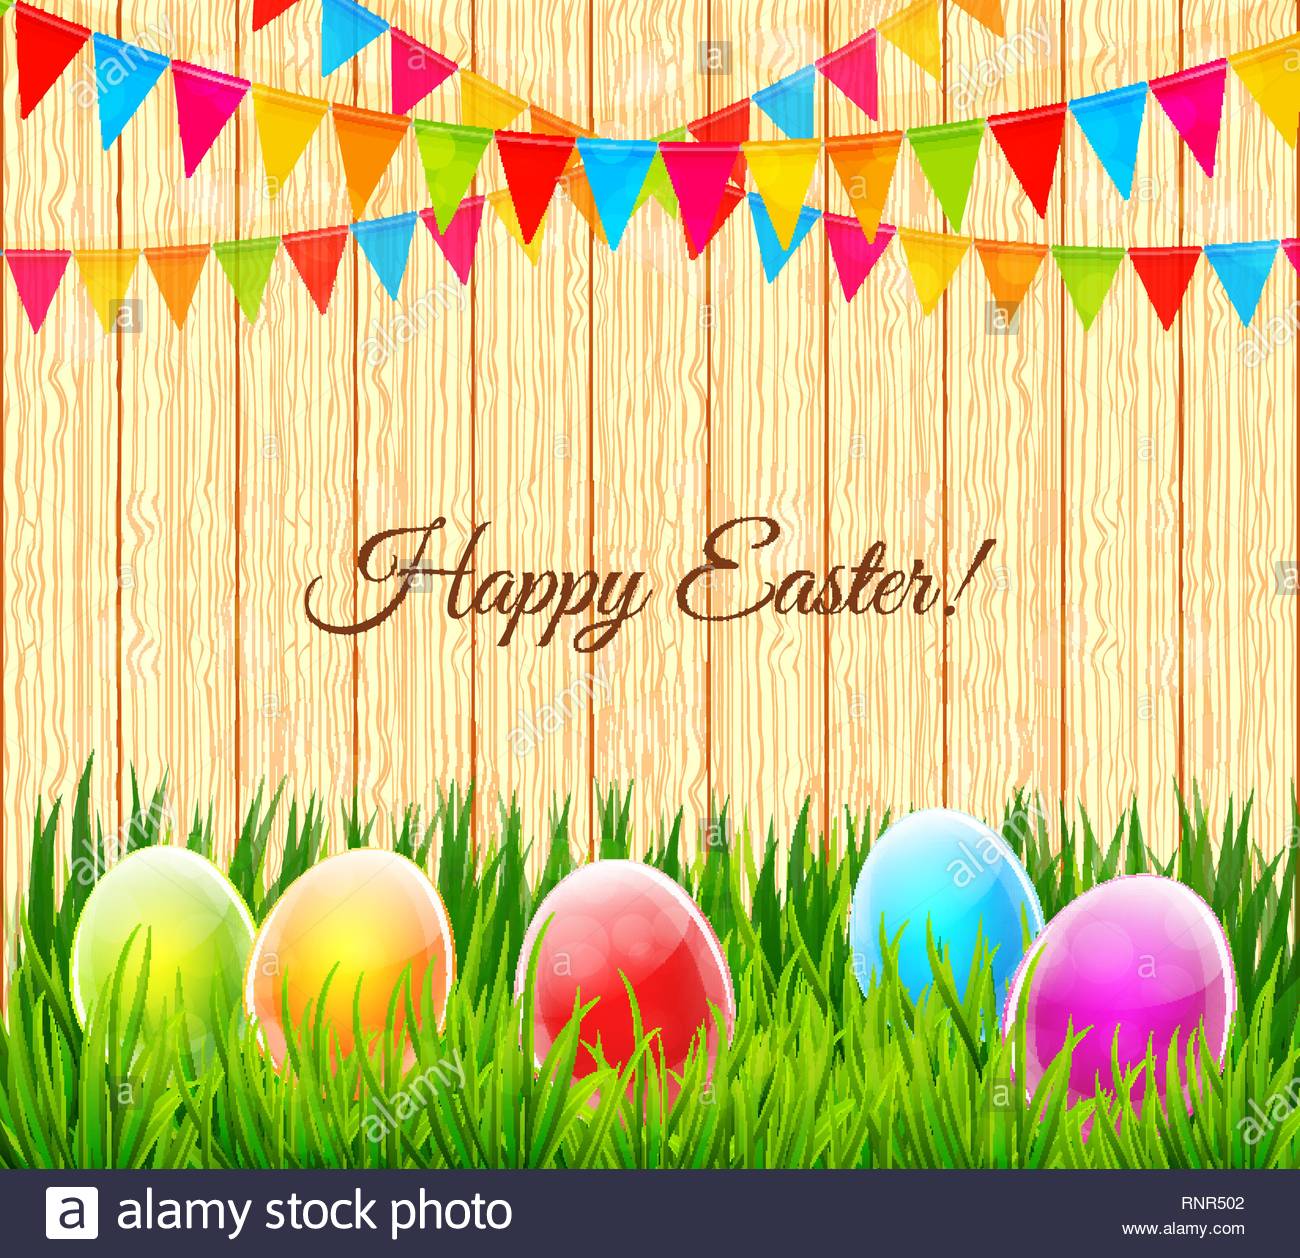 Happy Easter background vector Stock Vector Art Illustration